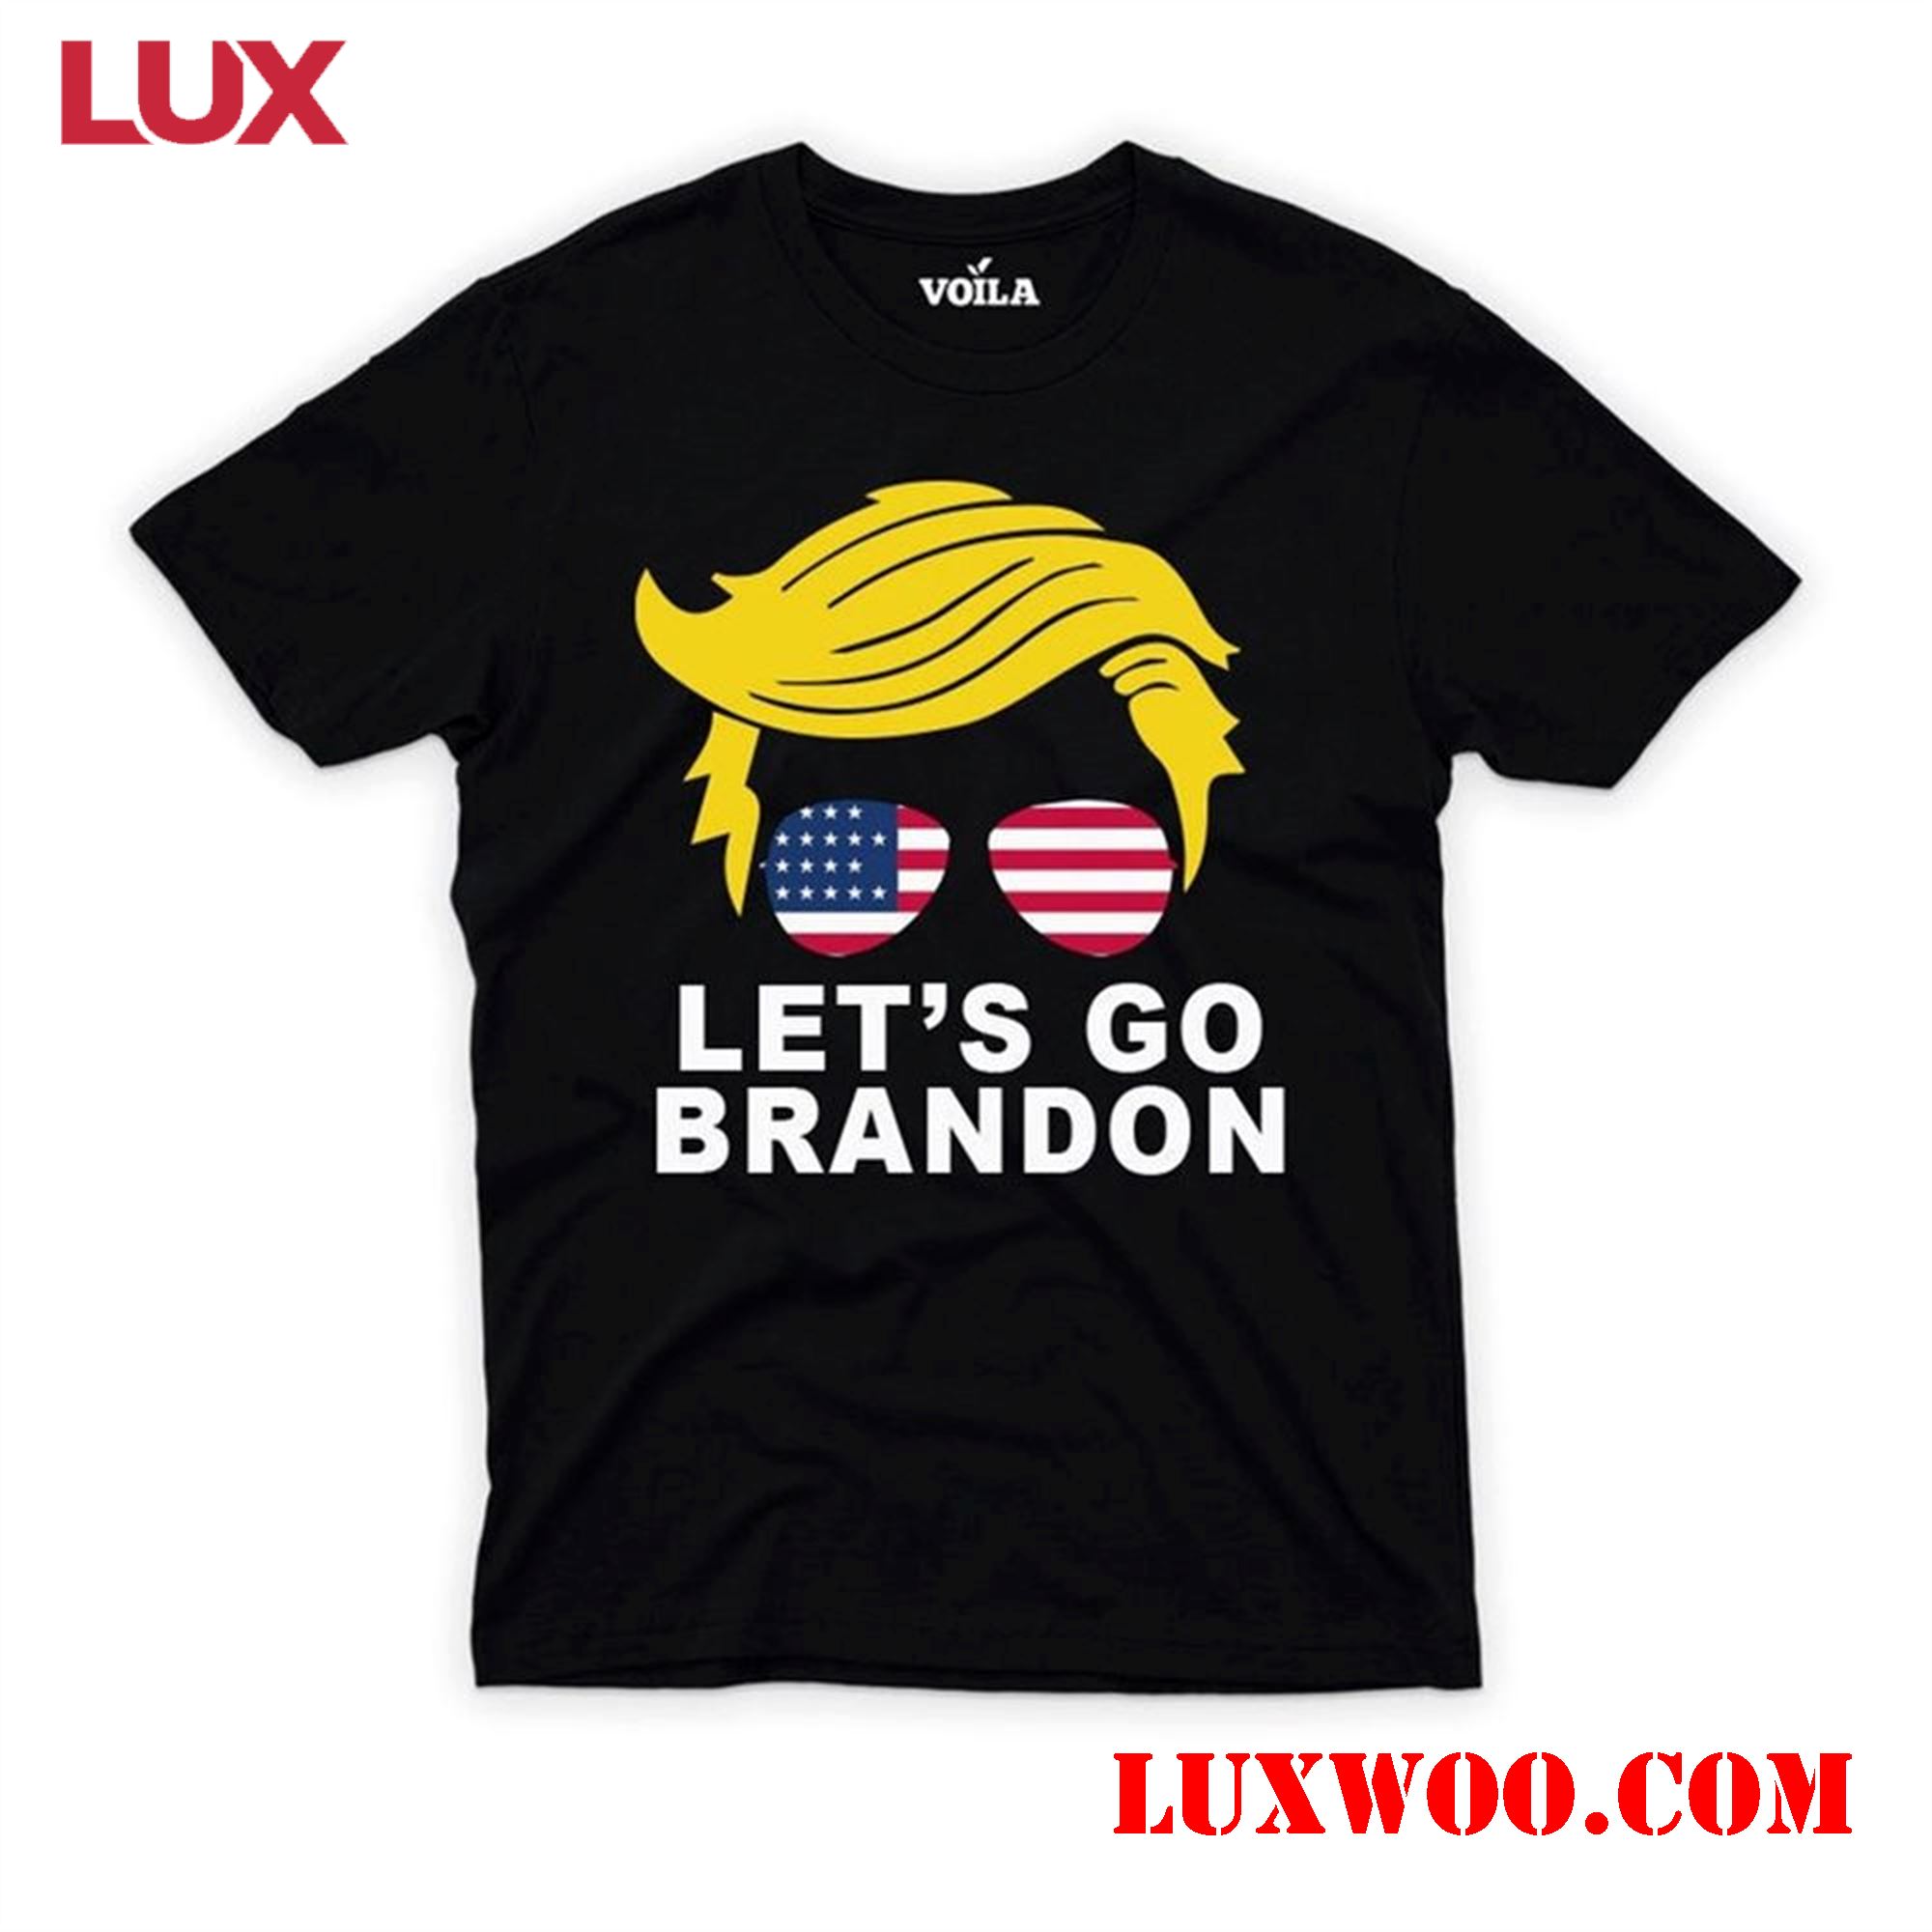 Amusing Shirt For Men Women Let's Go Brandon Shirt With Joe Biden Chant